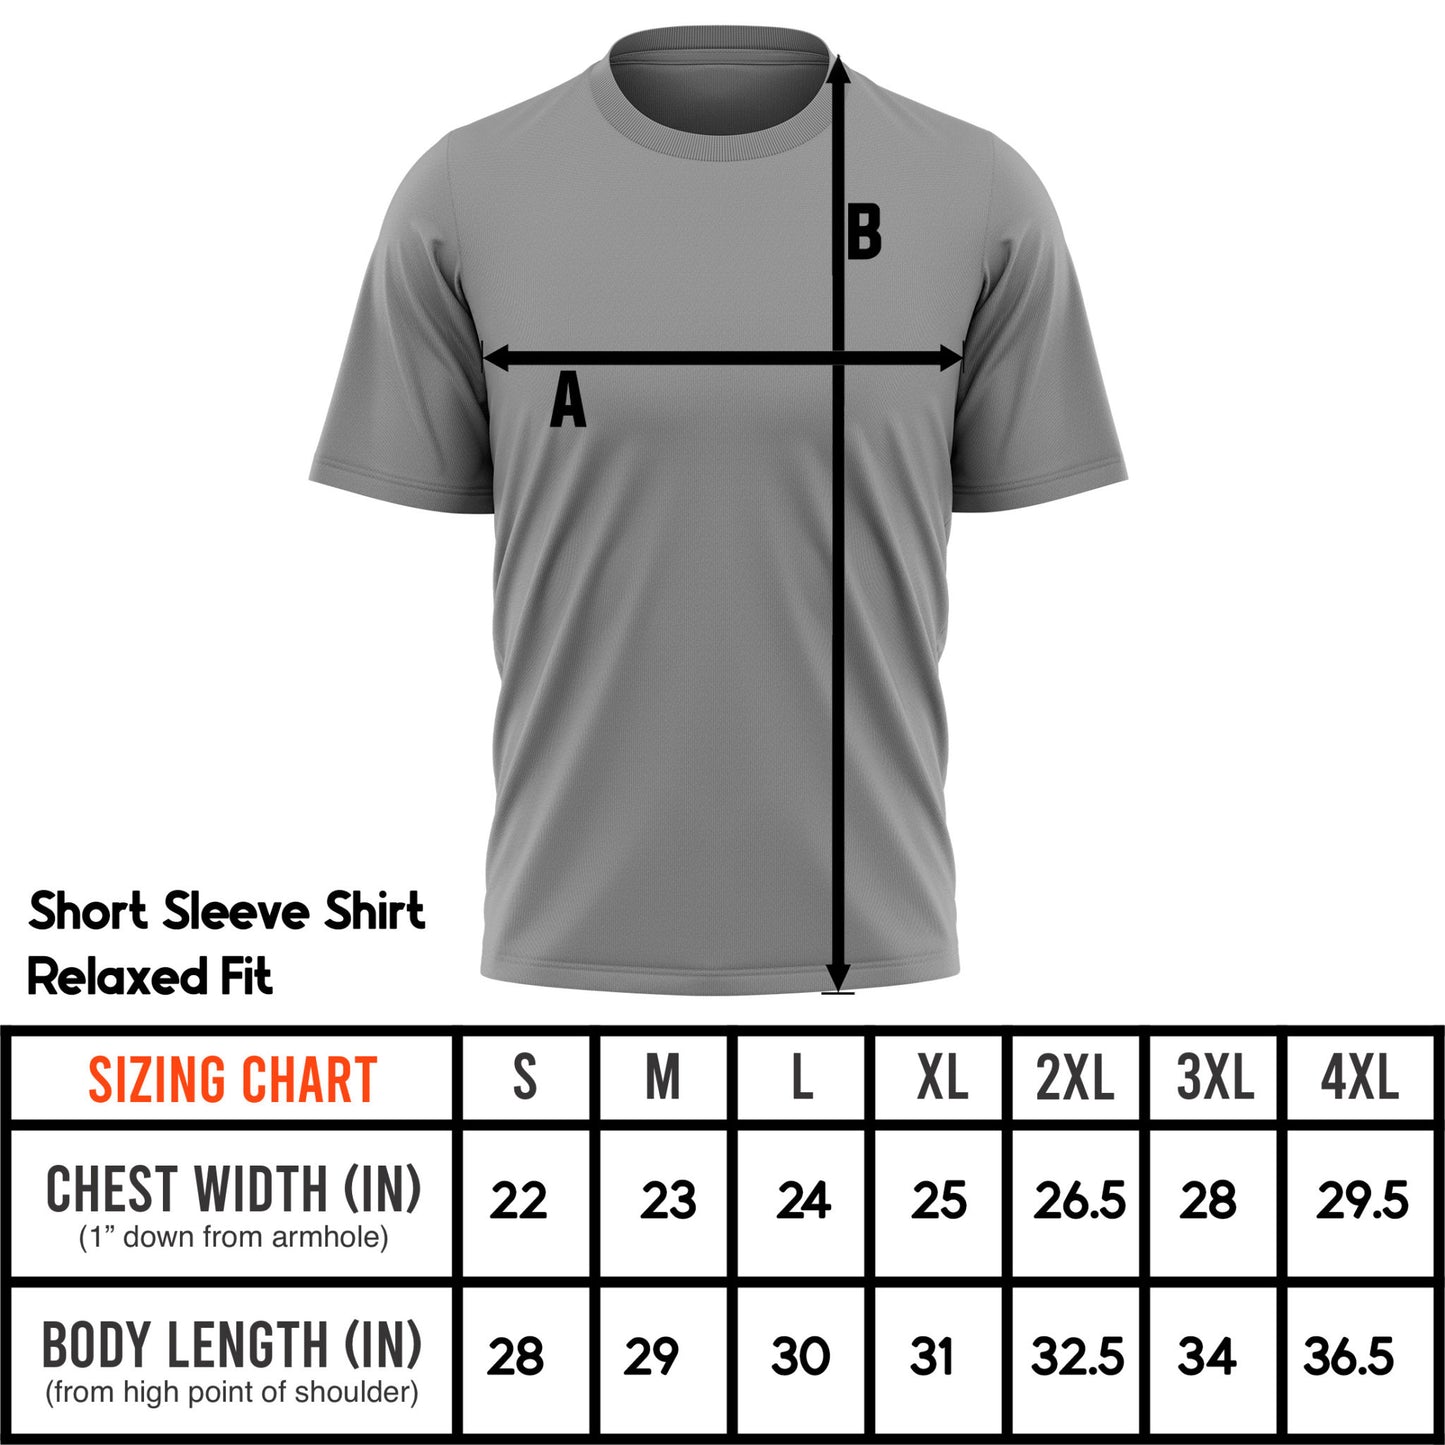 Anarchy Bat Company Short Sleeve Shirt - Atomic